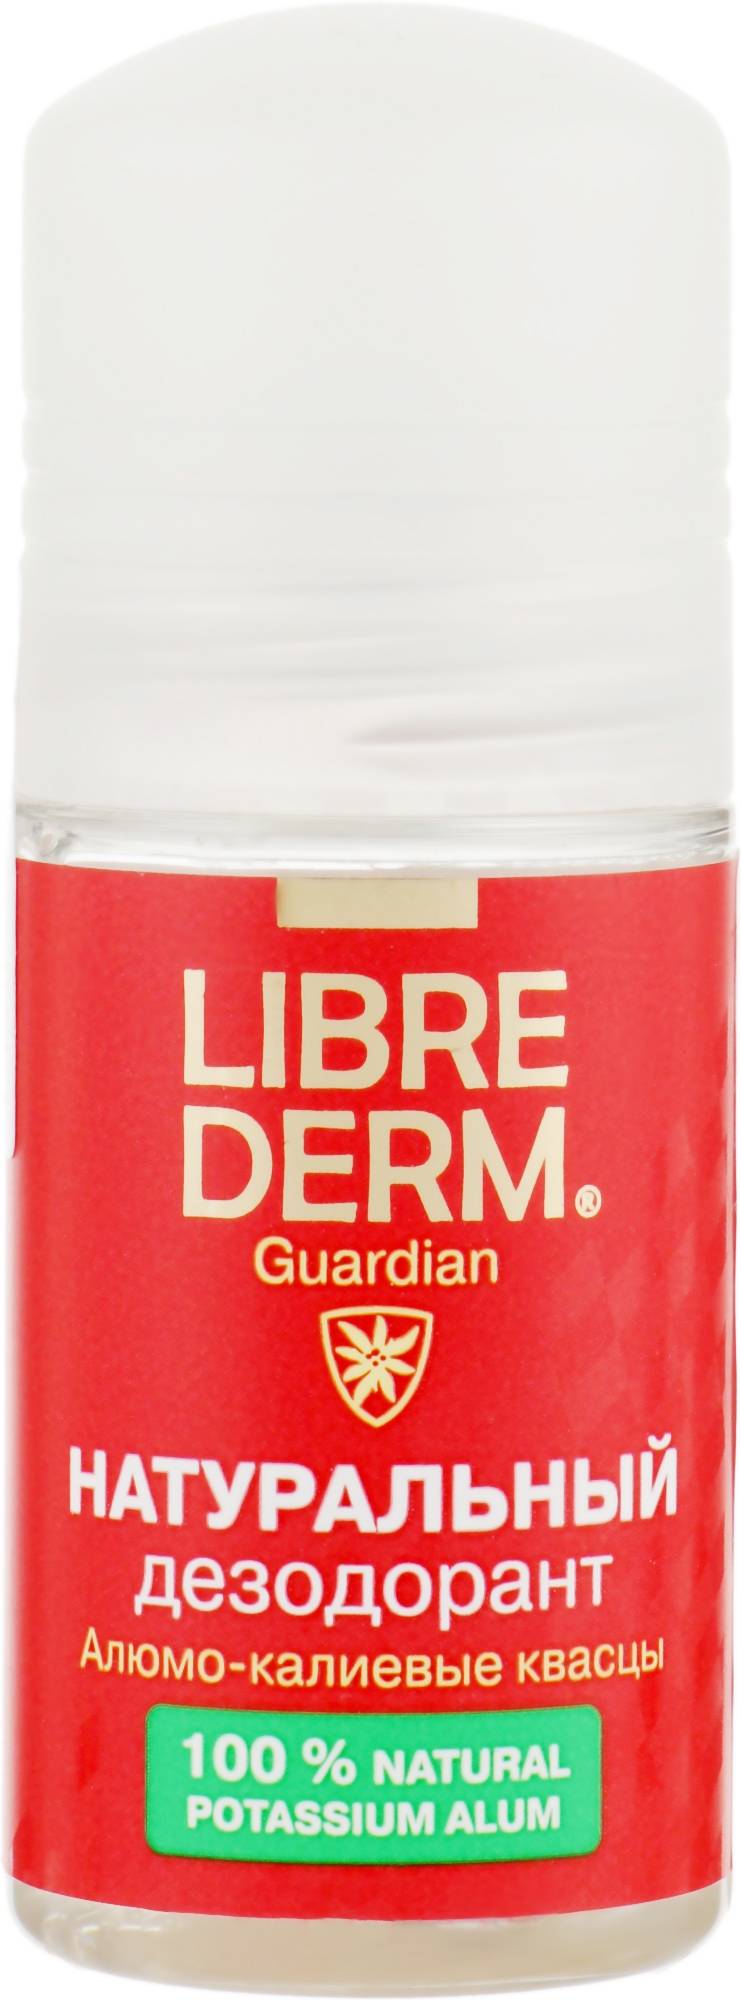 Натуральный дезодорант Librederm, 50 ml